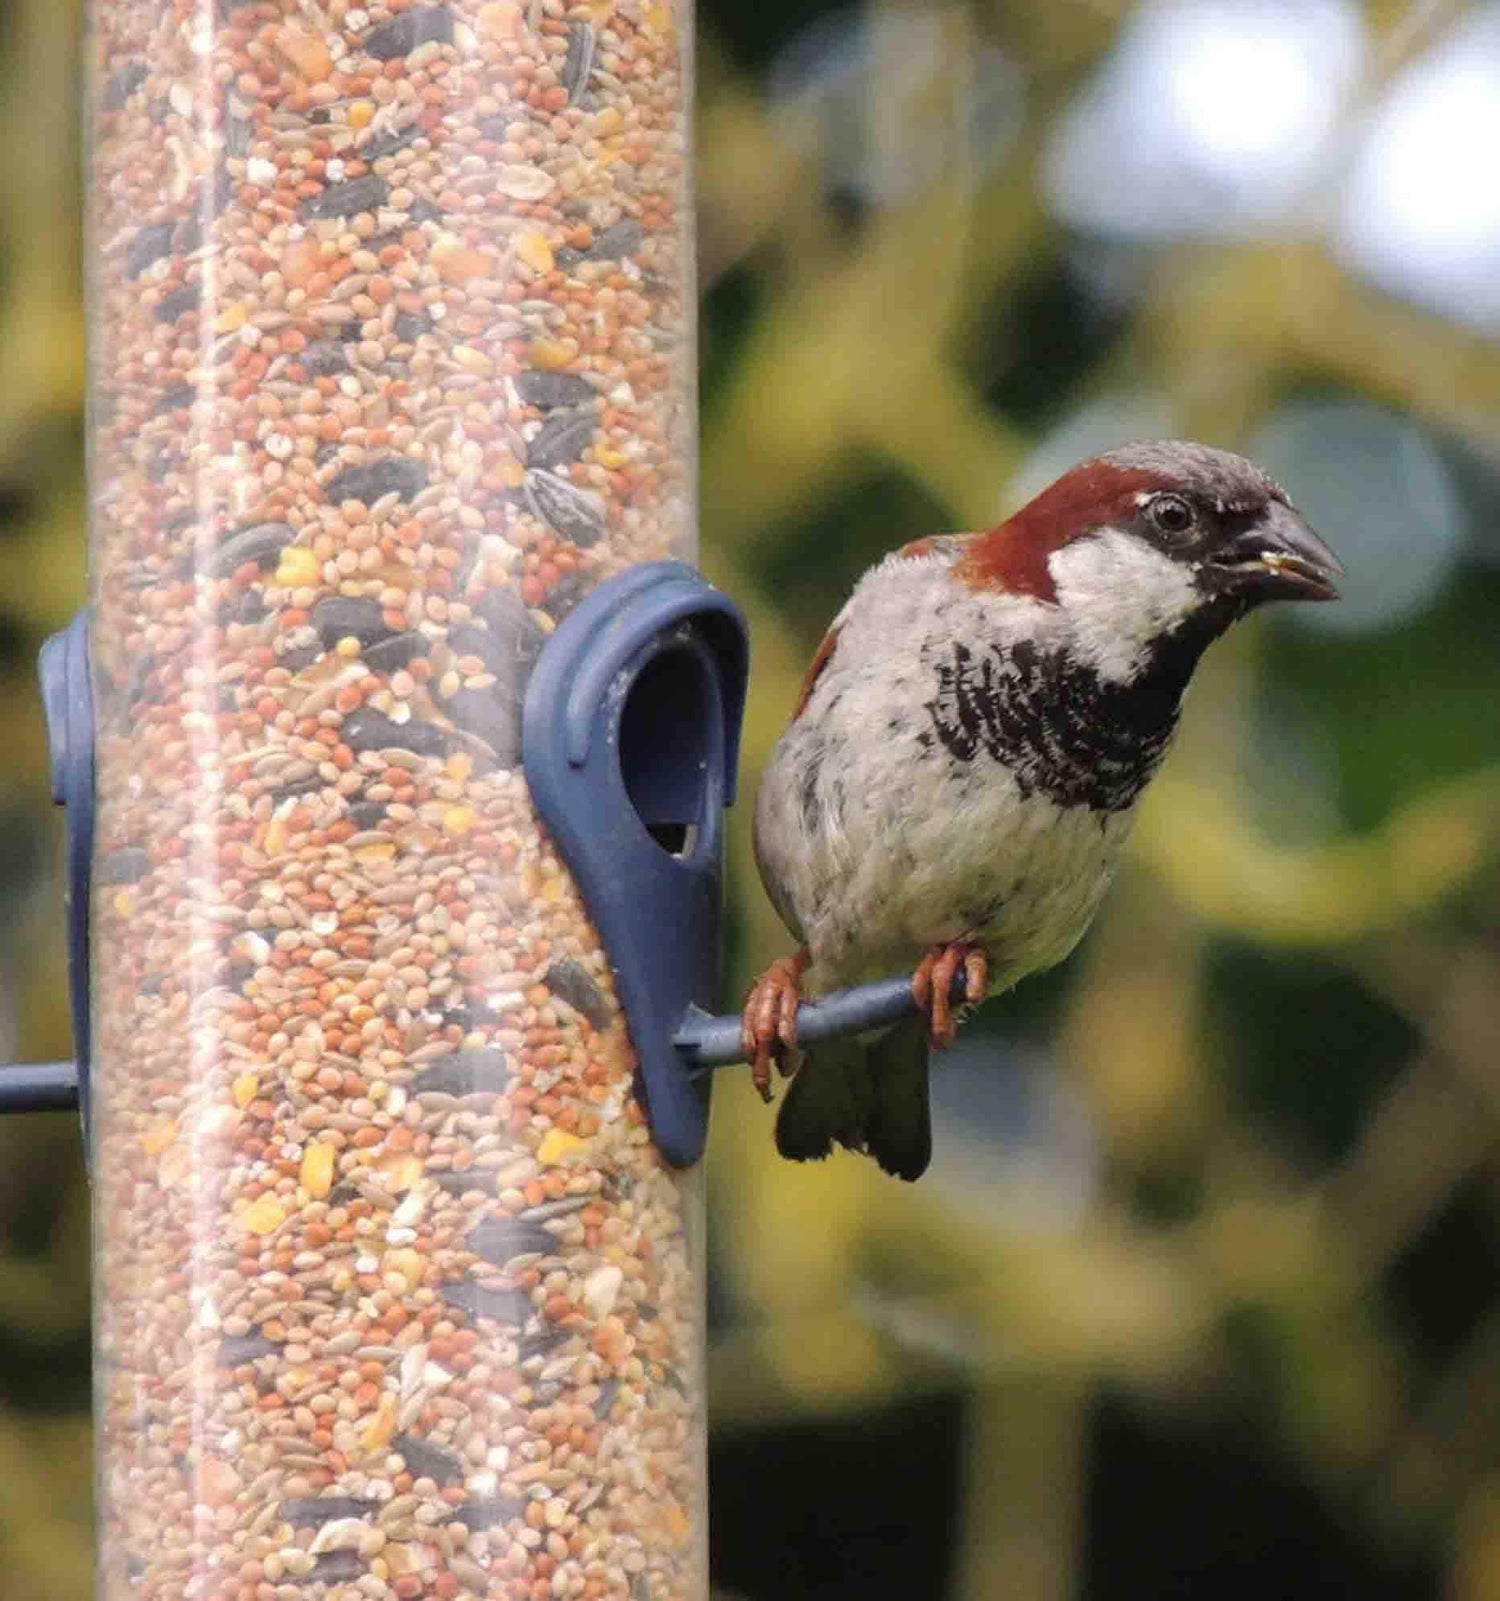 Sparrow on bird feeder eating Haith's Premium wheat free wild bird food